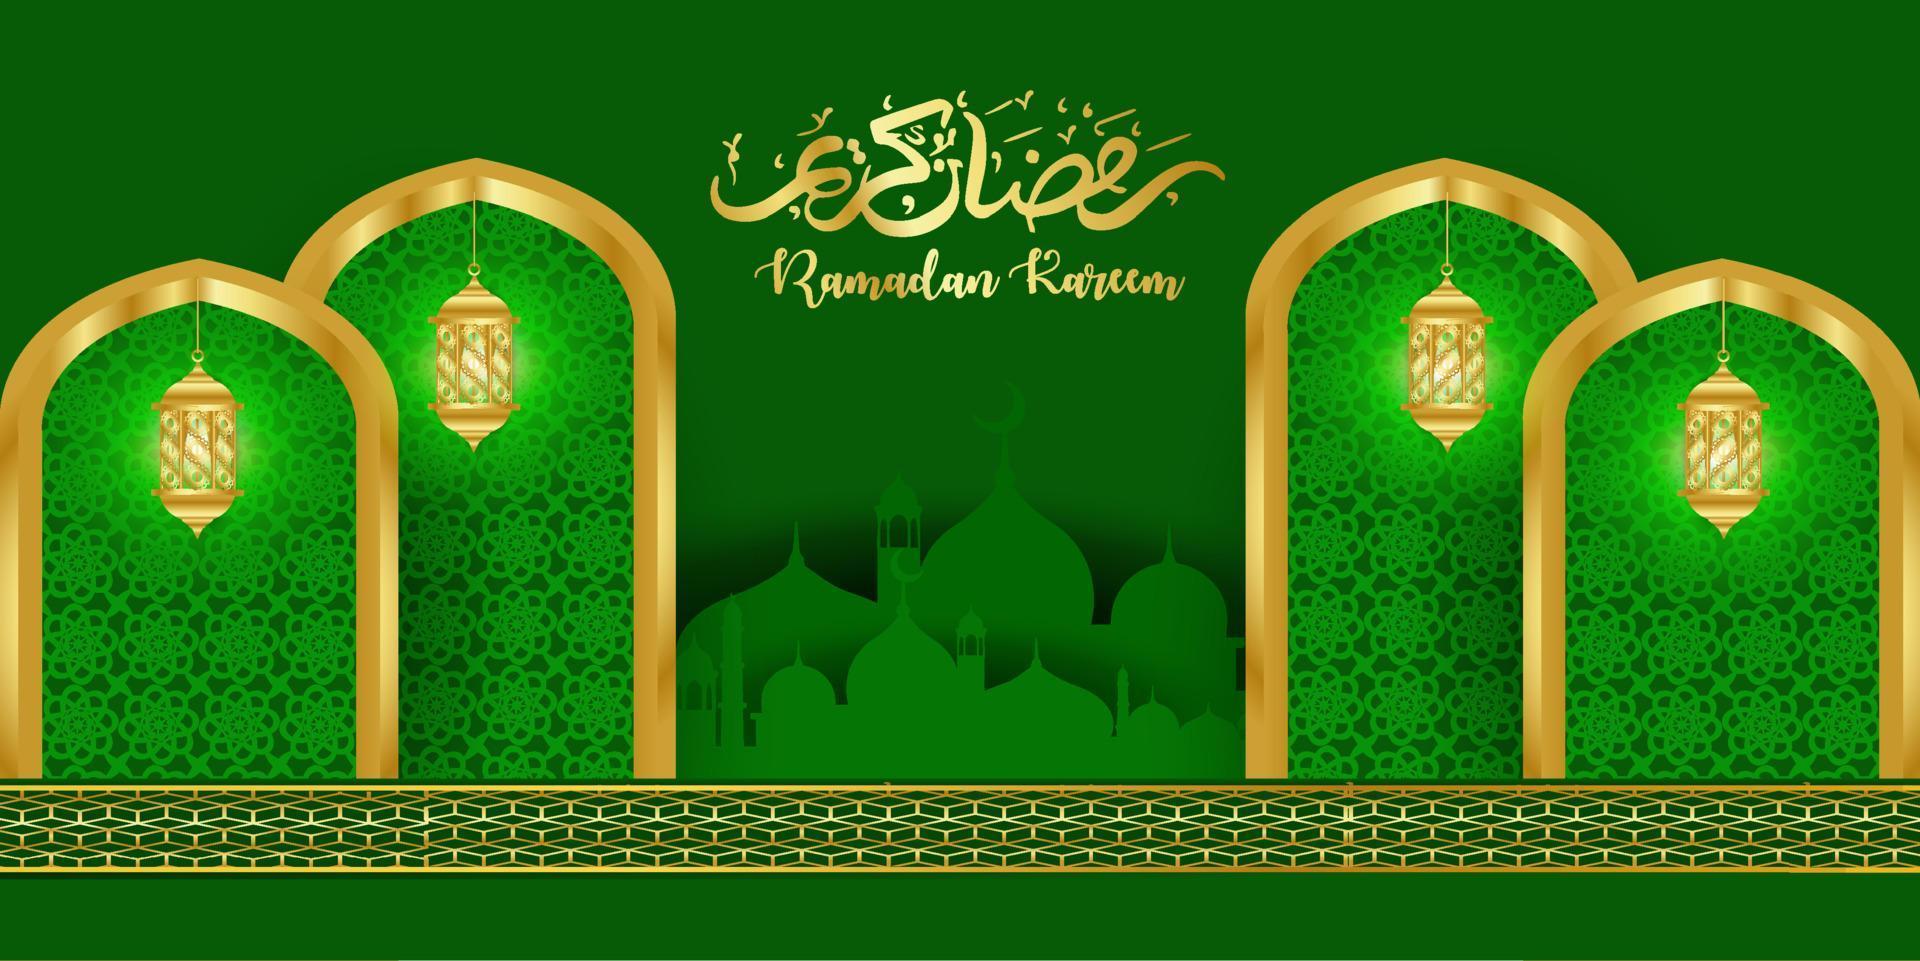 Ramadan Kareem einfaches Design mit grüner Farbe vektor